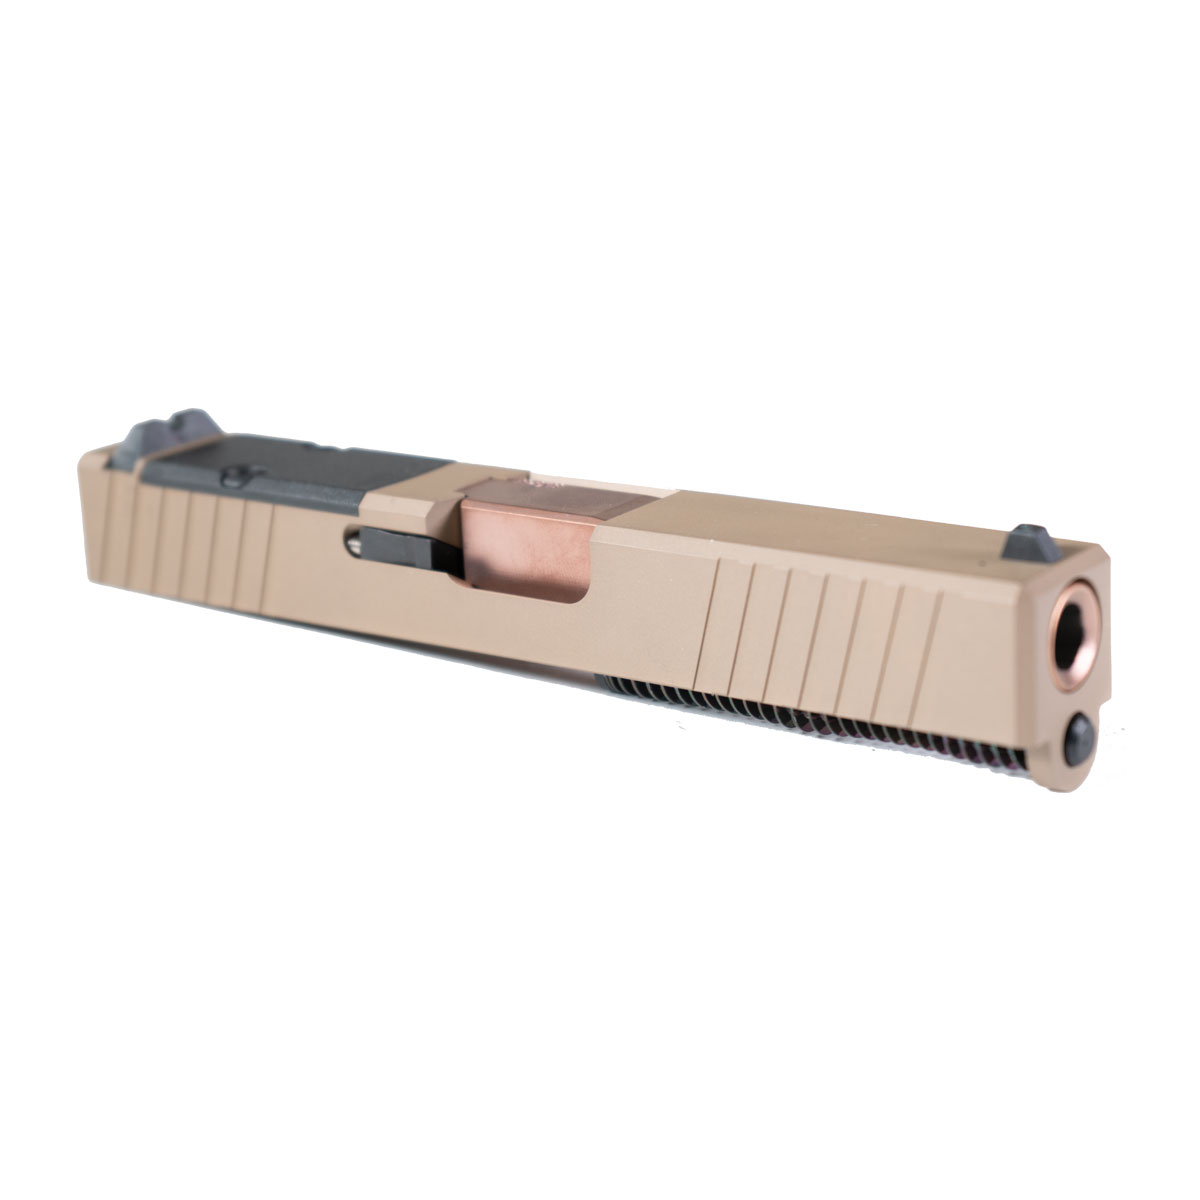 DTT 'Ripple' 9mm Complete Slide Kit - Glock 19  Compatible 